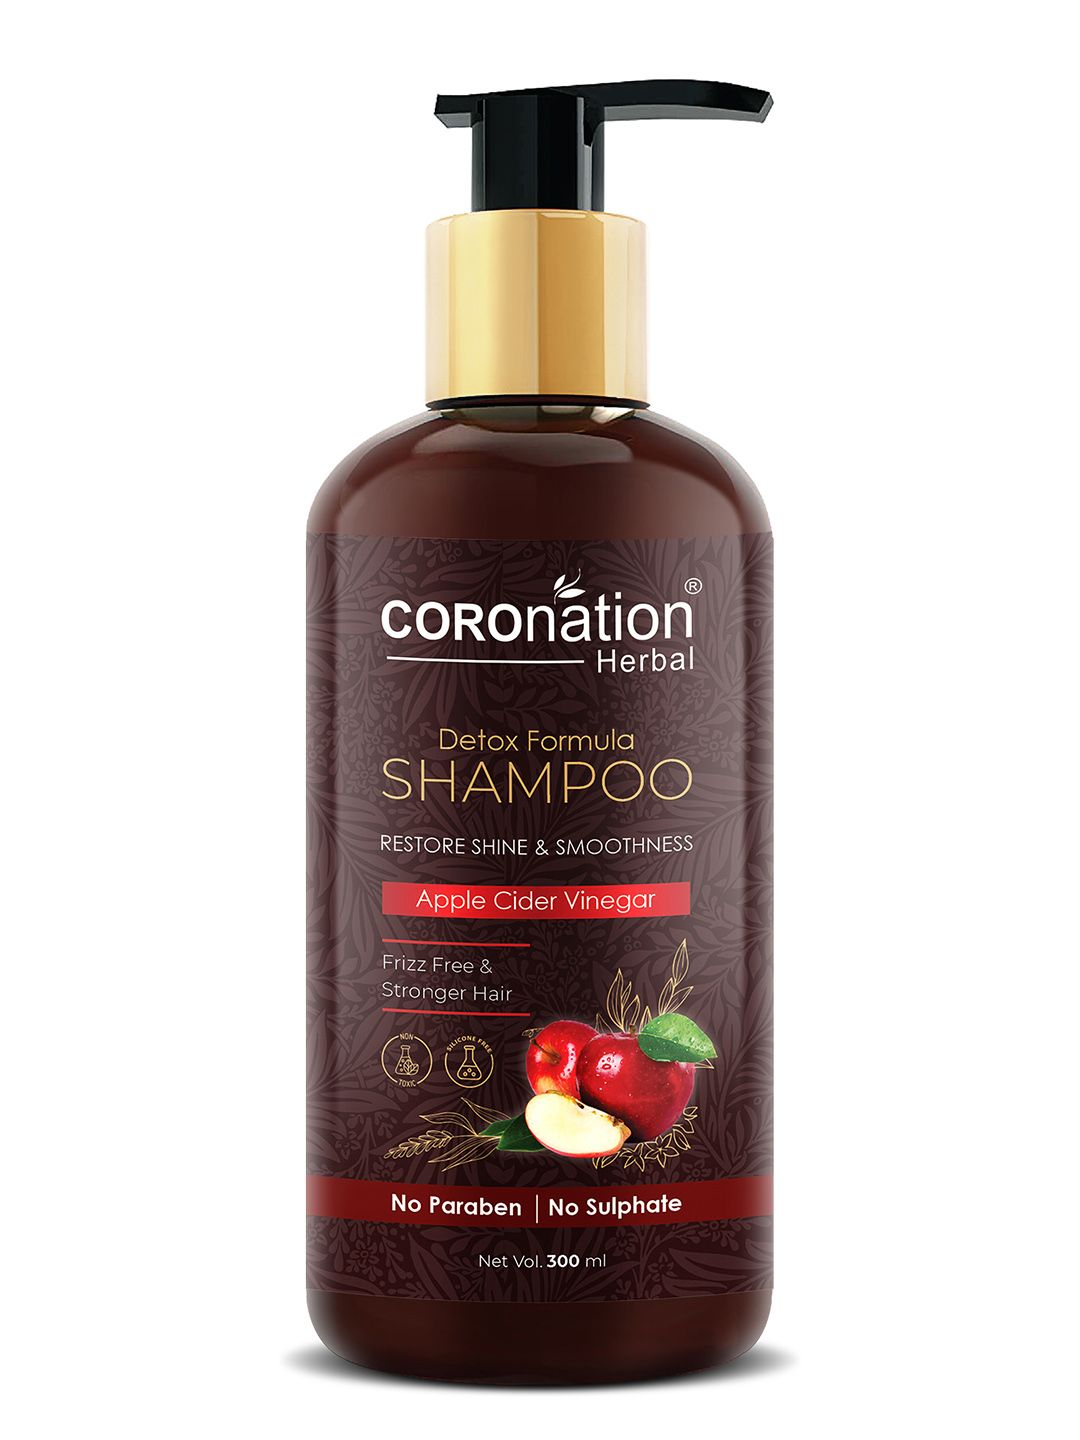 COROnation Herbal White Detox Formula Shampoo with Organic Apple Cider Vinegar 300 Ml Price in India